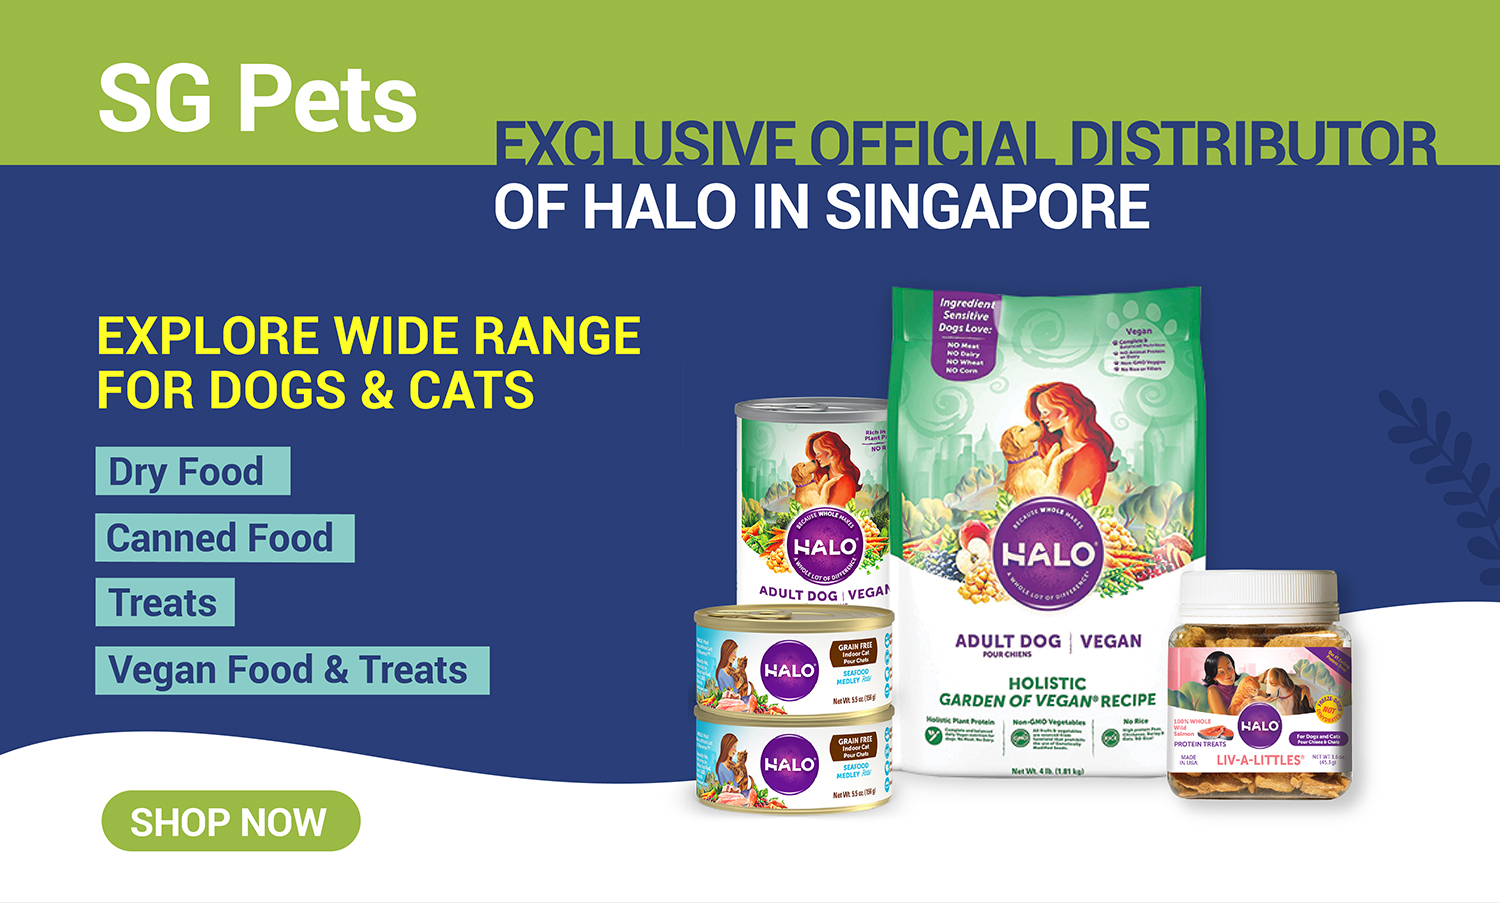 Halo Dog Food Brand in Singapore